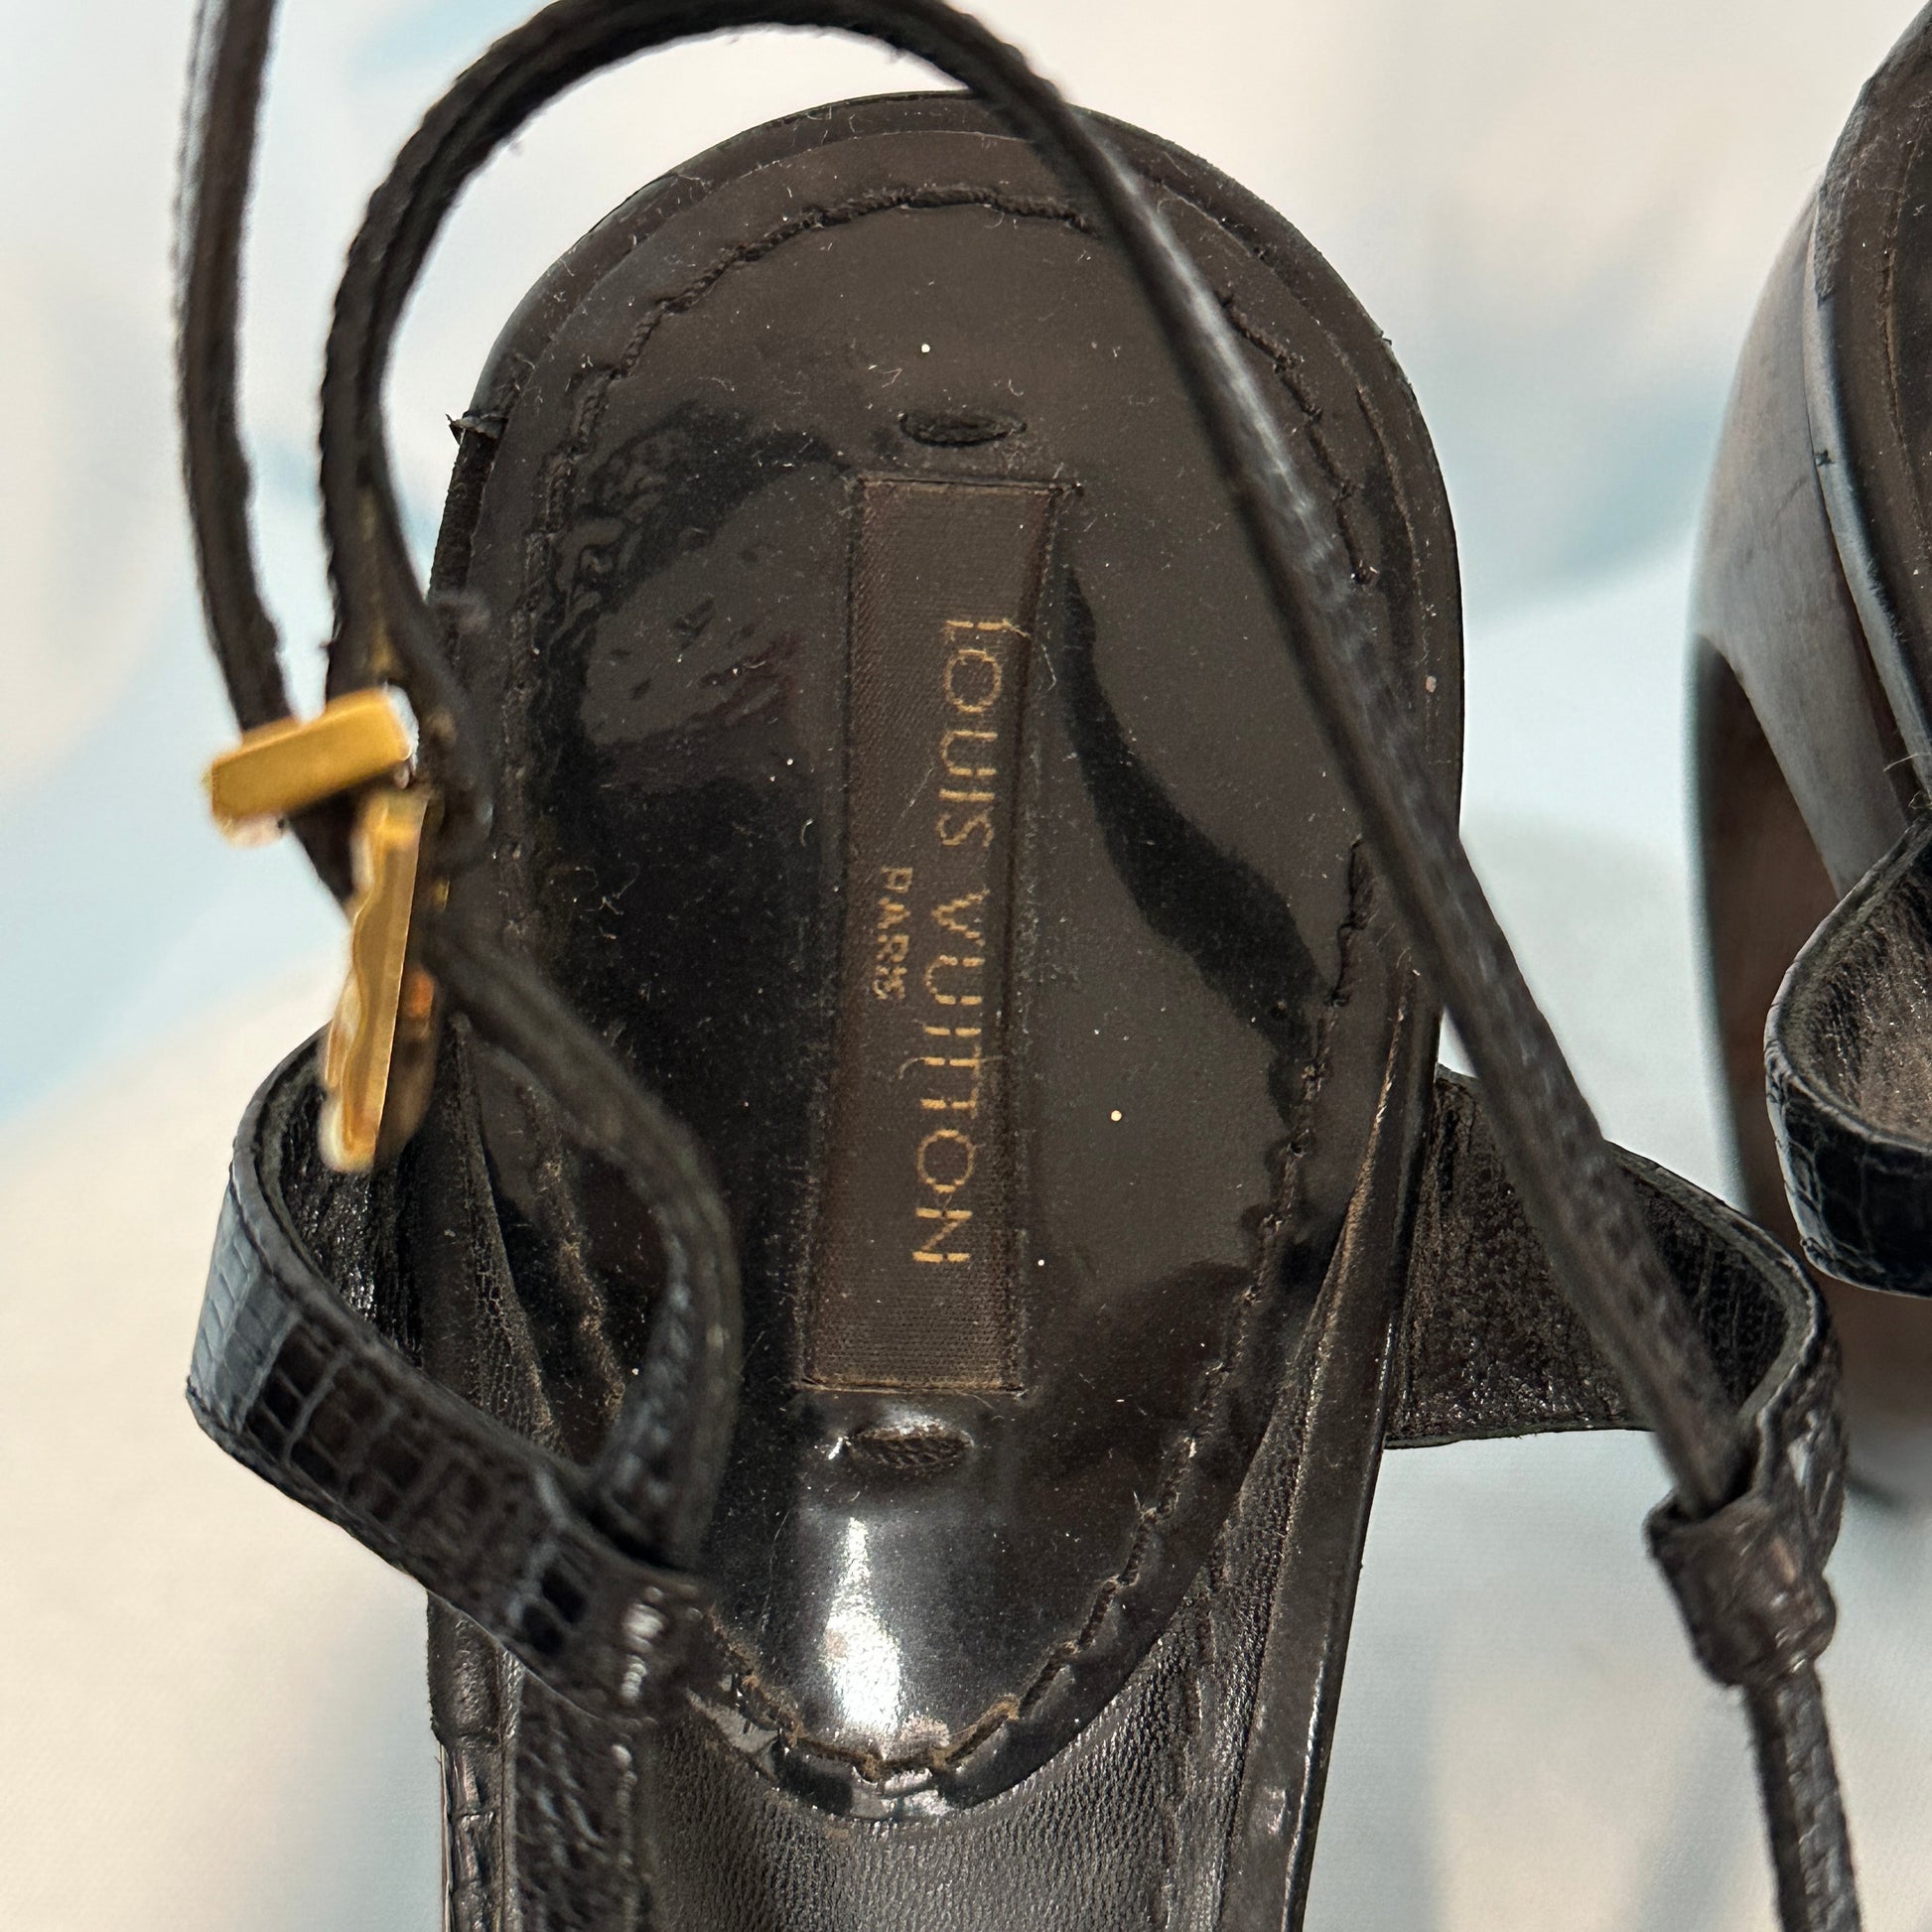 Louis Vuitton Spring 2007 Frieque Heels – Studded Petals Vintage